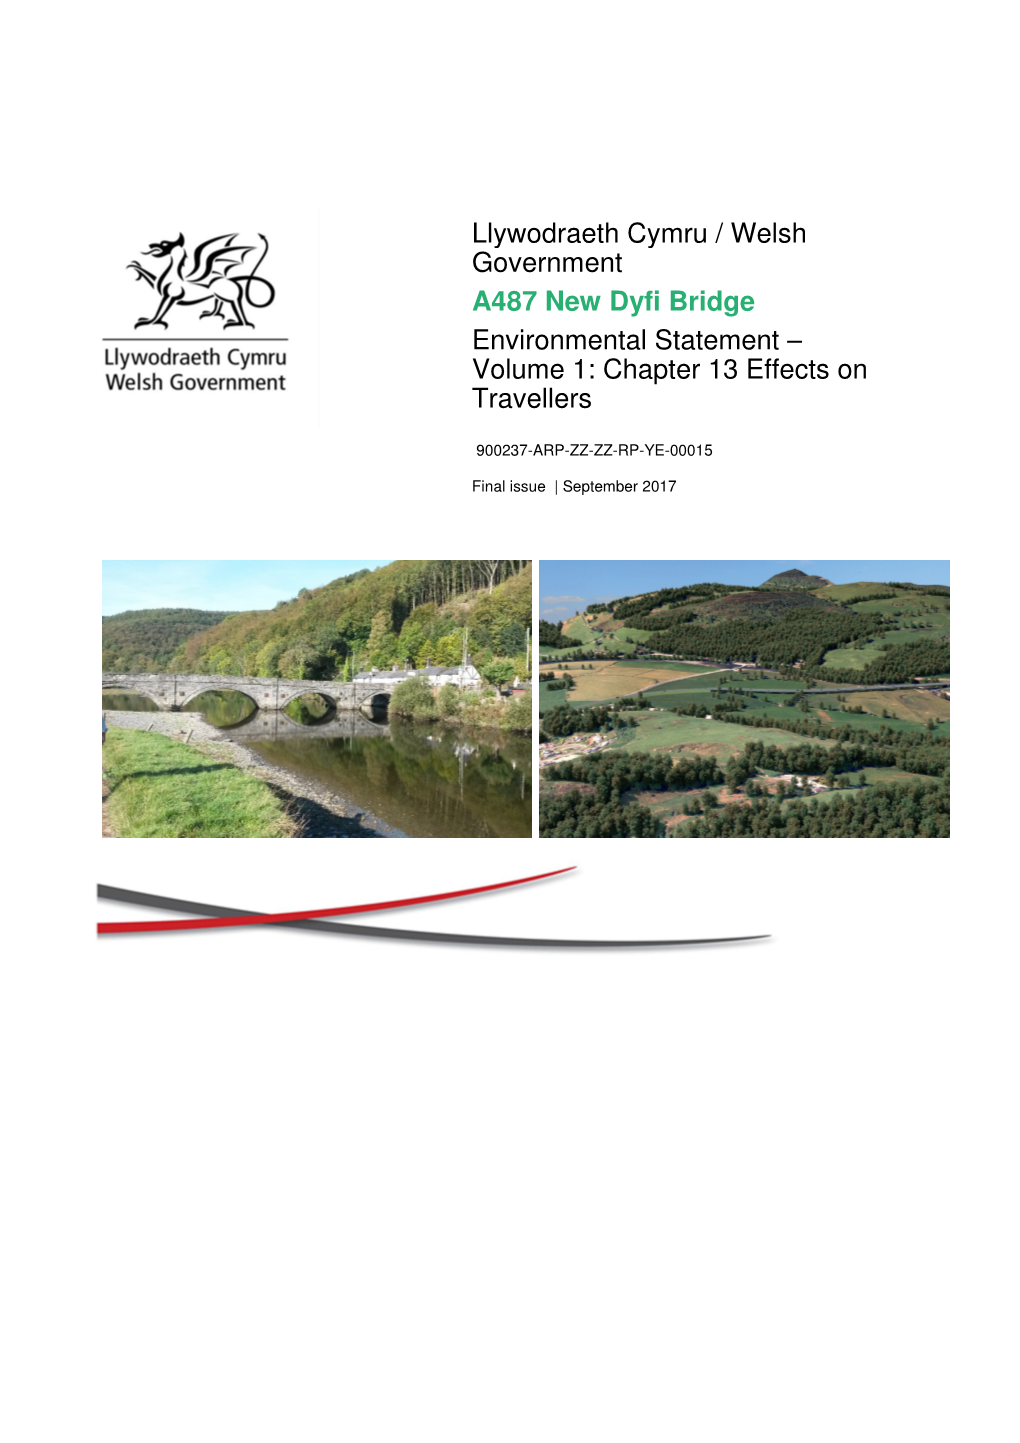 Llywodraeth Cymru / Welsh Government A487 New Dyfi Bridge Environmental Statement – Volume 1 : Chapter 13 Effects on Travellers